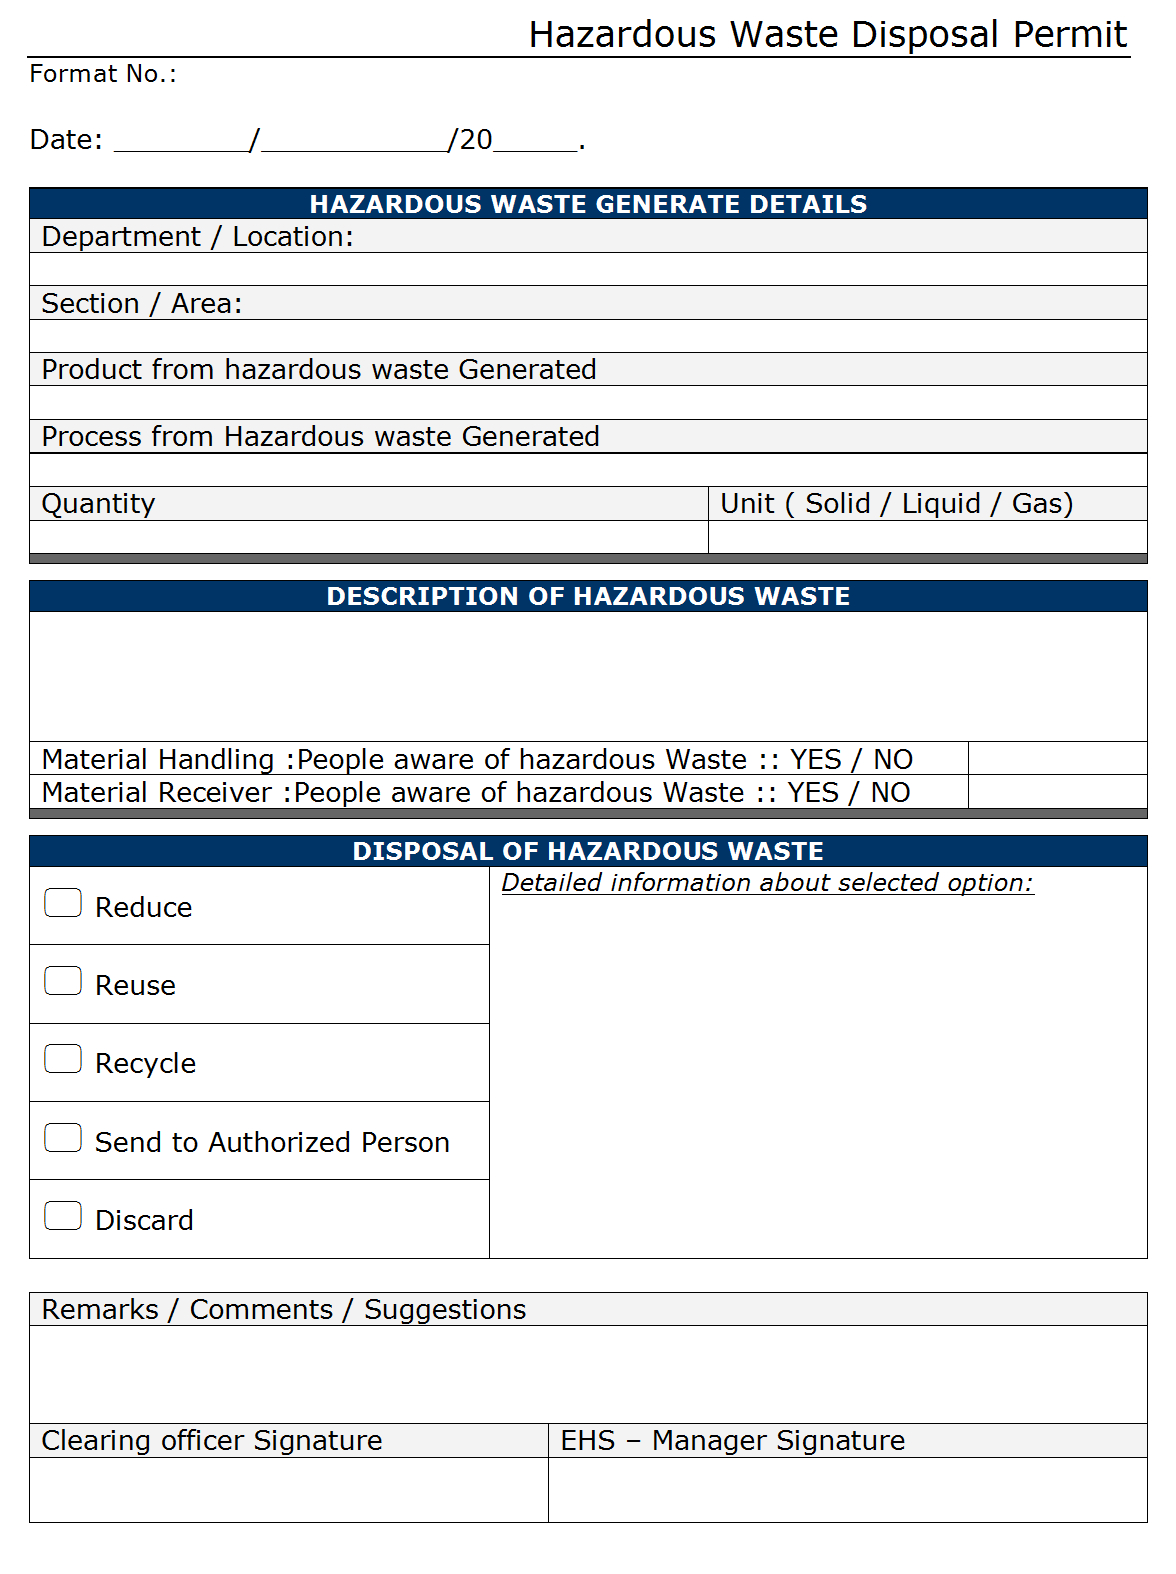 Hazardous Waste Disposal Permit – Inside Waste Management Report Template